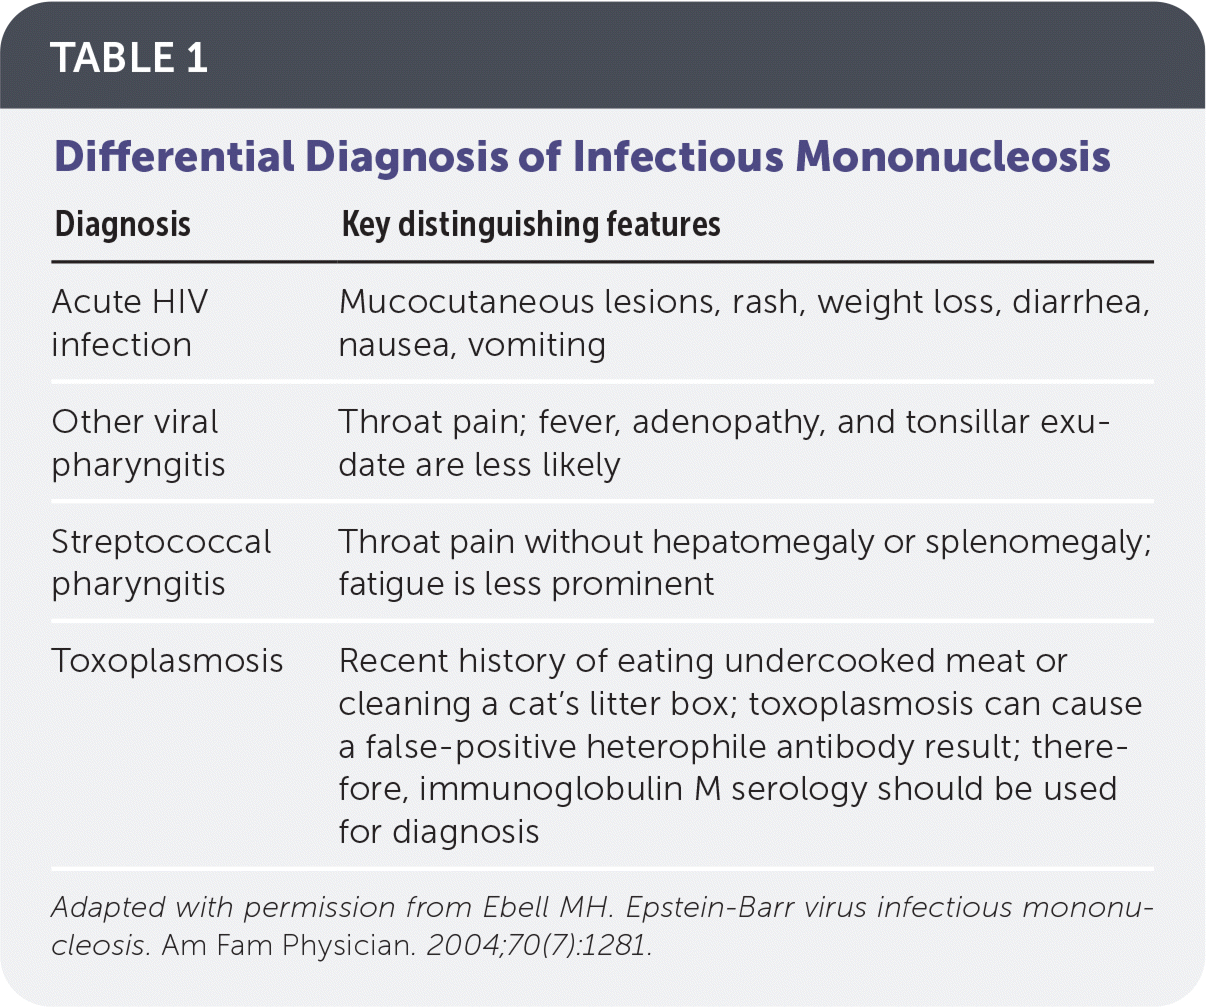 Mononucleosis (mono) : Symptoms, Causes and Treatment